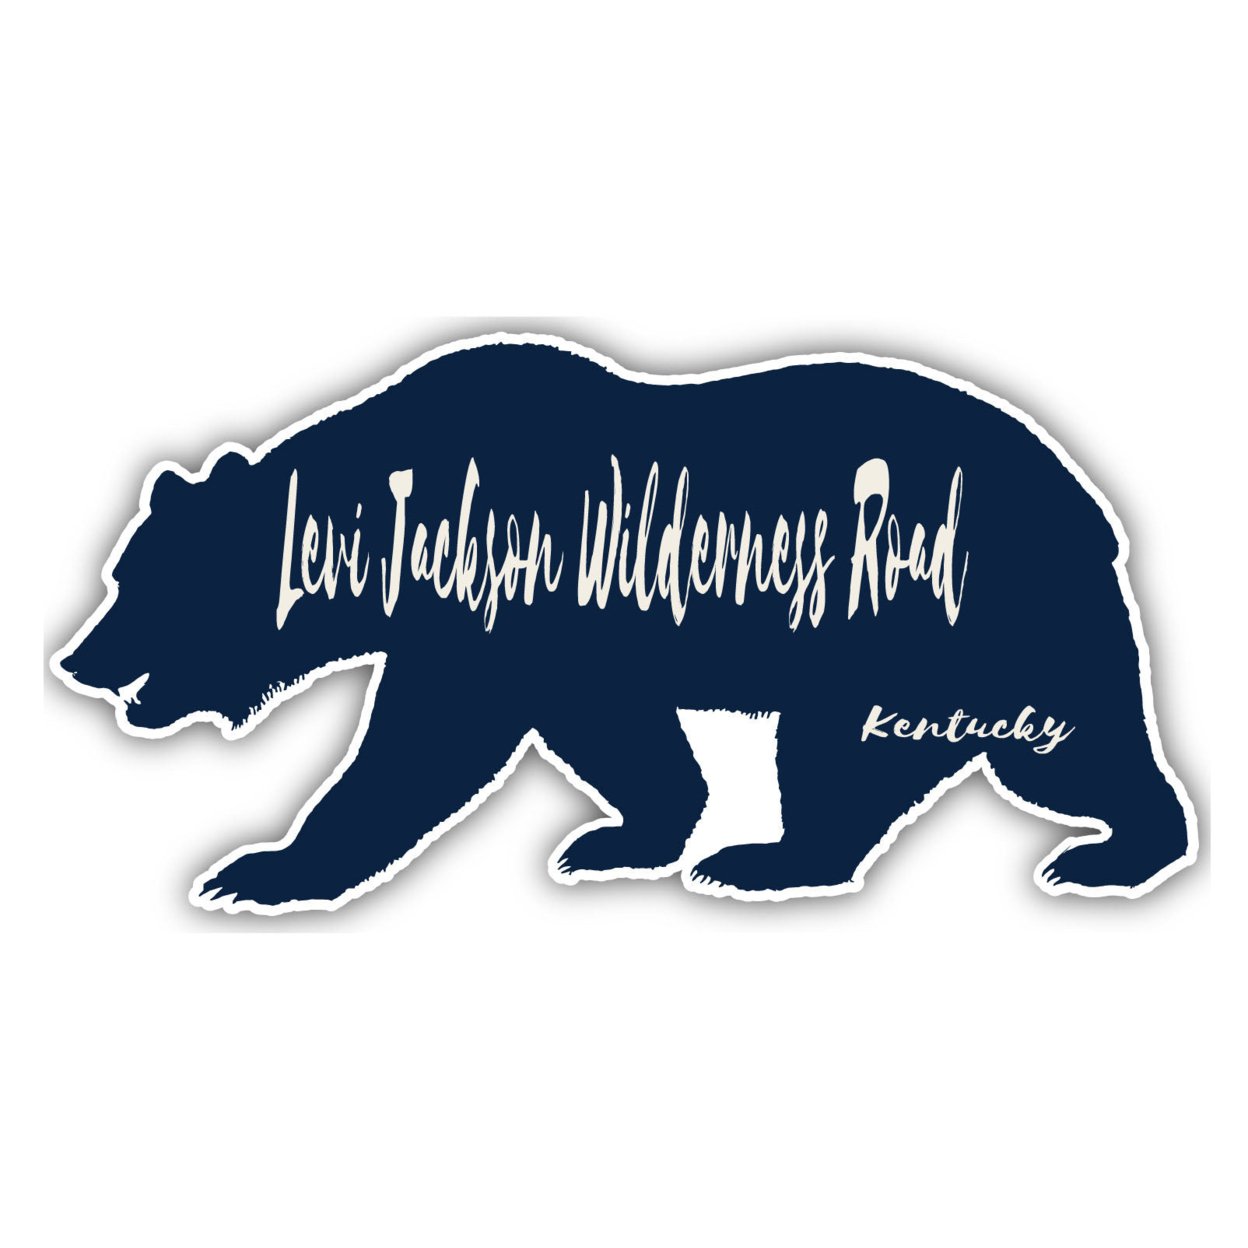 Levi Jackson Wilderness Road Kentucky Souvenir Decorative Stickers (Choose Theme And Size) - 4-Inch, Bear